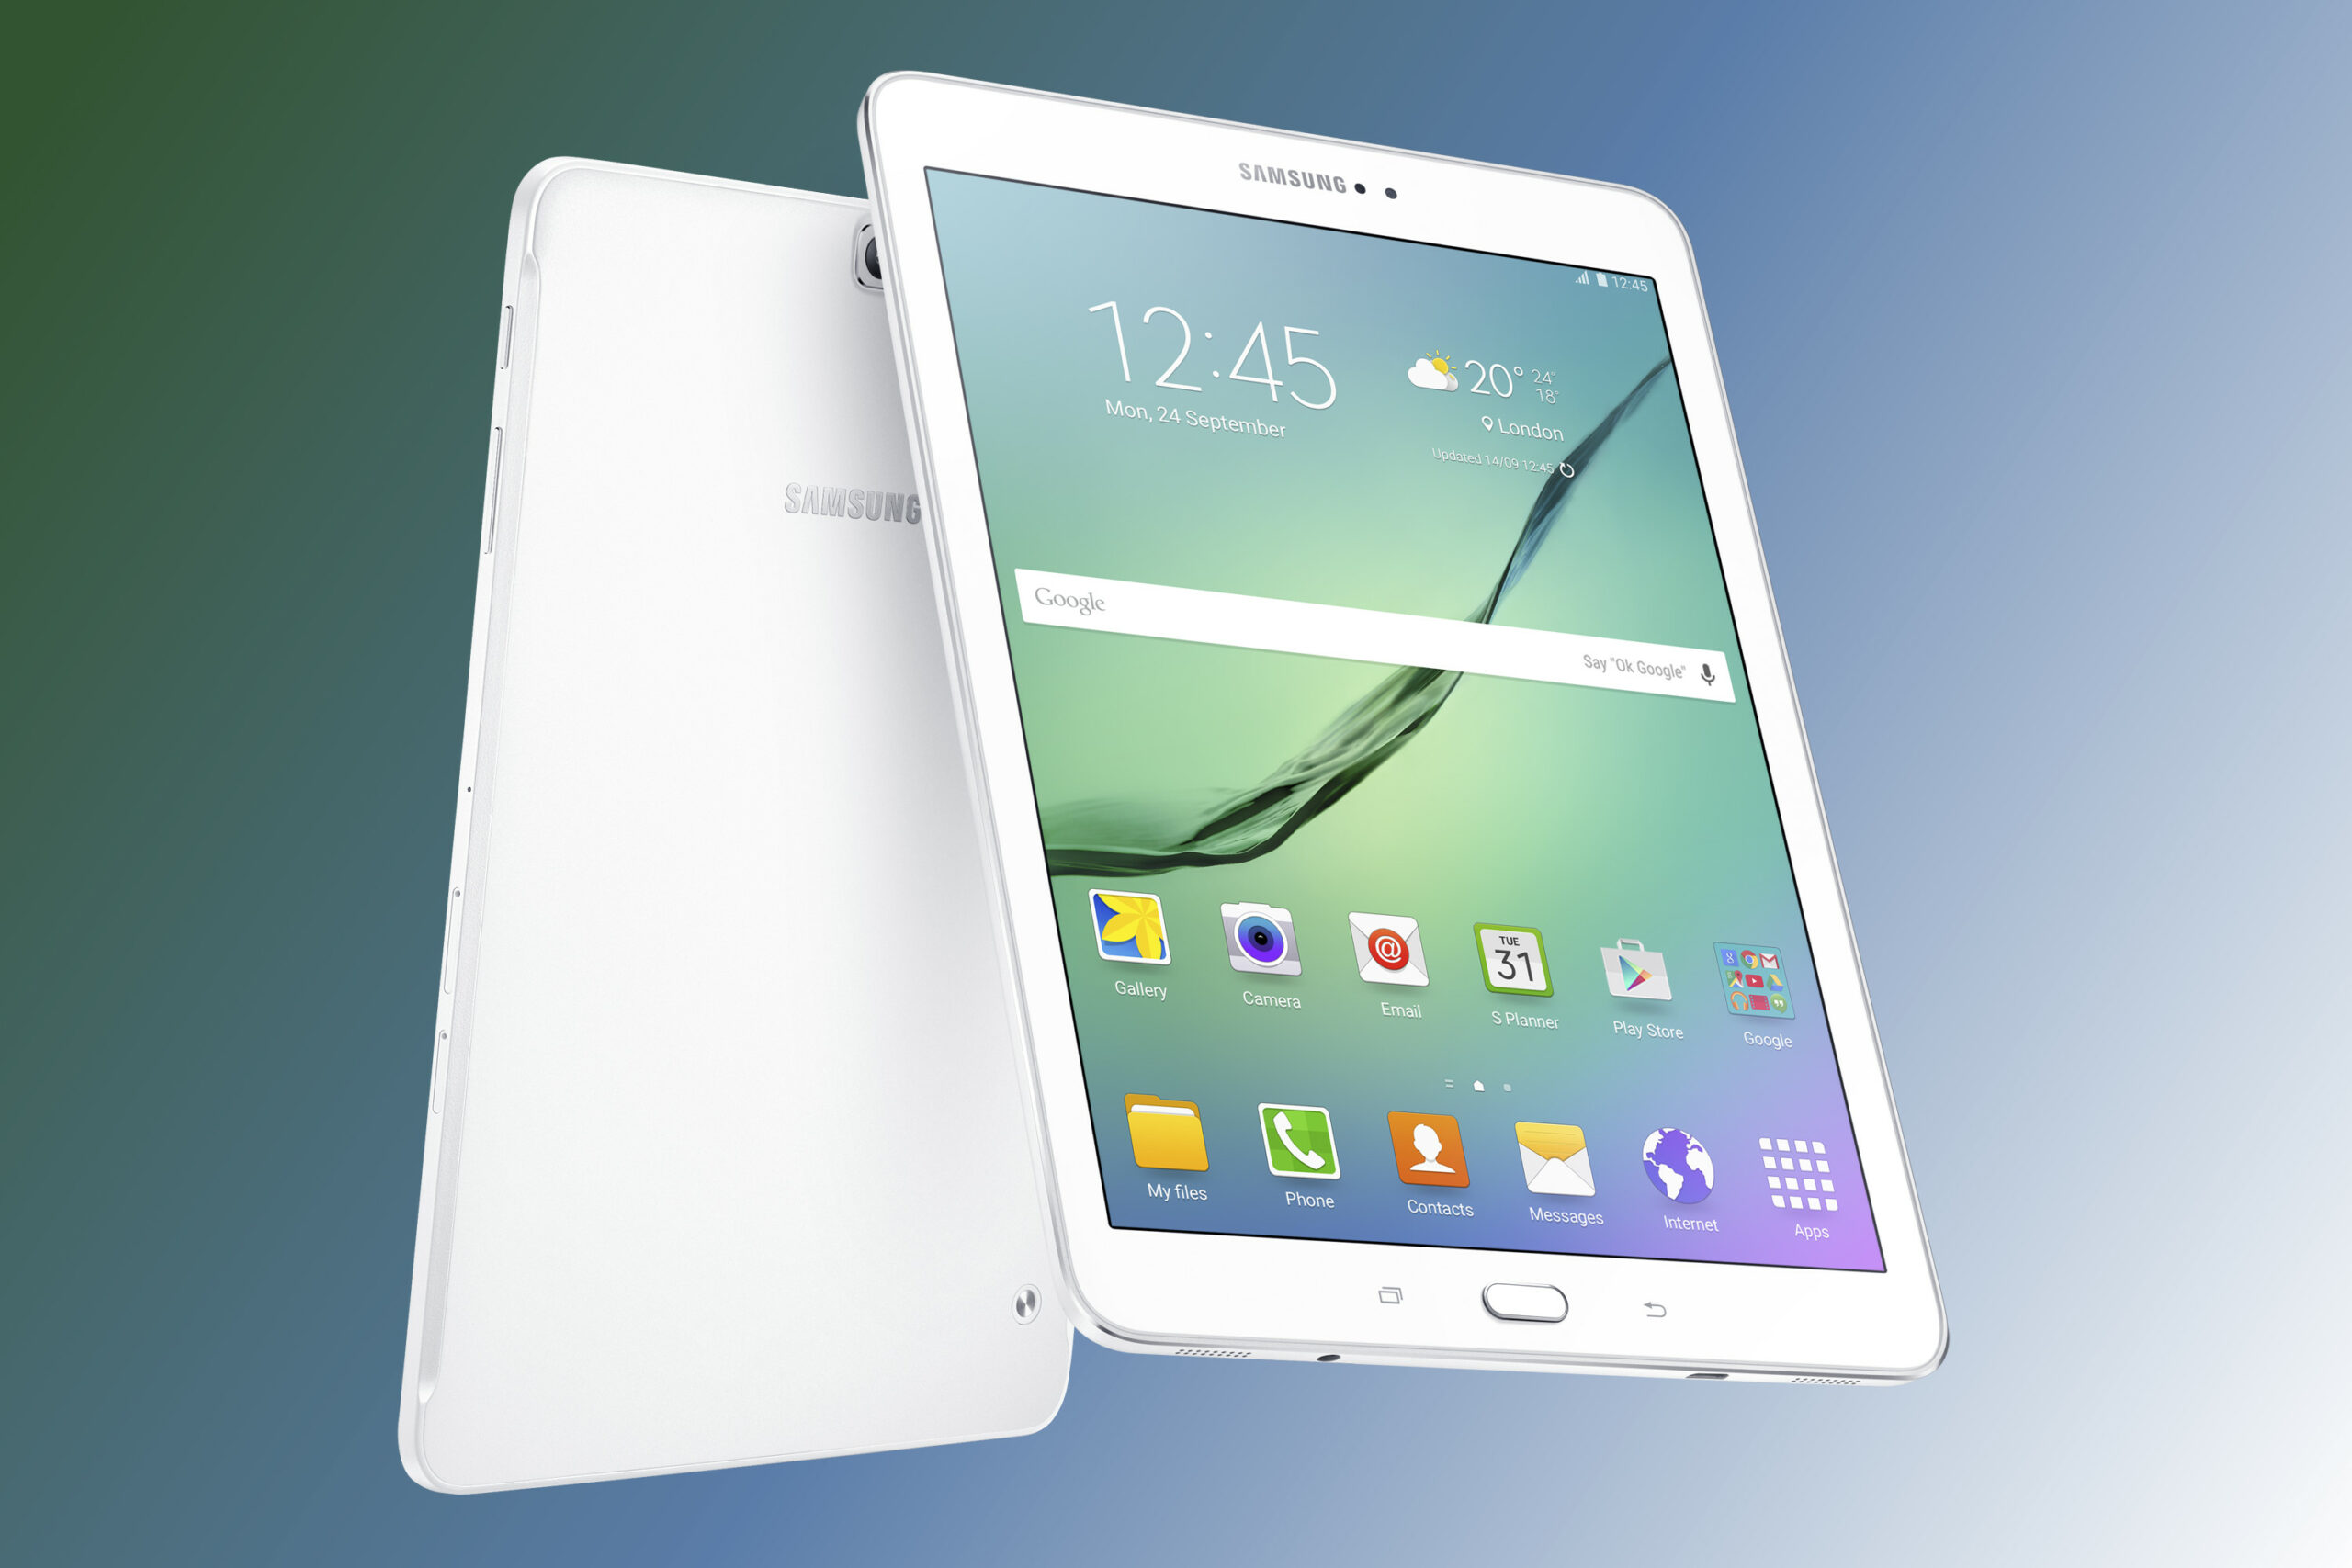 Samsung introduces Galaxy Tab S, a Super AMOLED tablet – Samsung